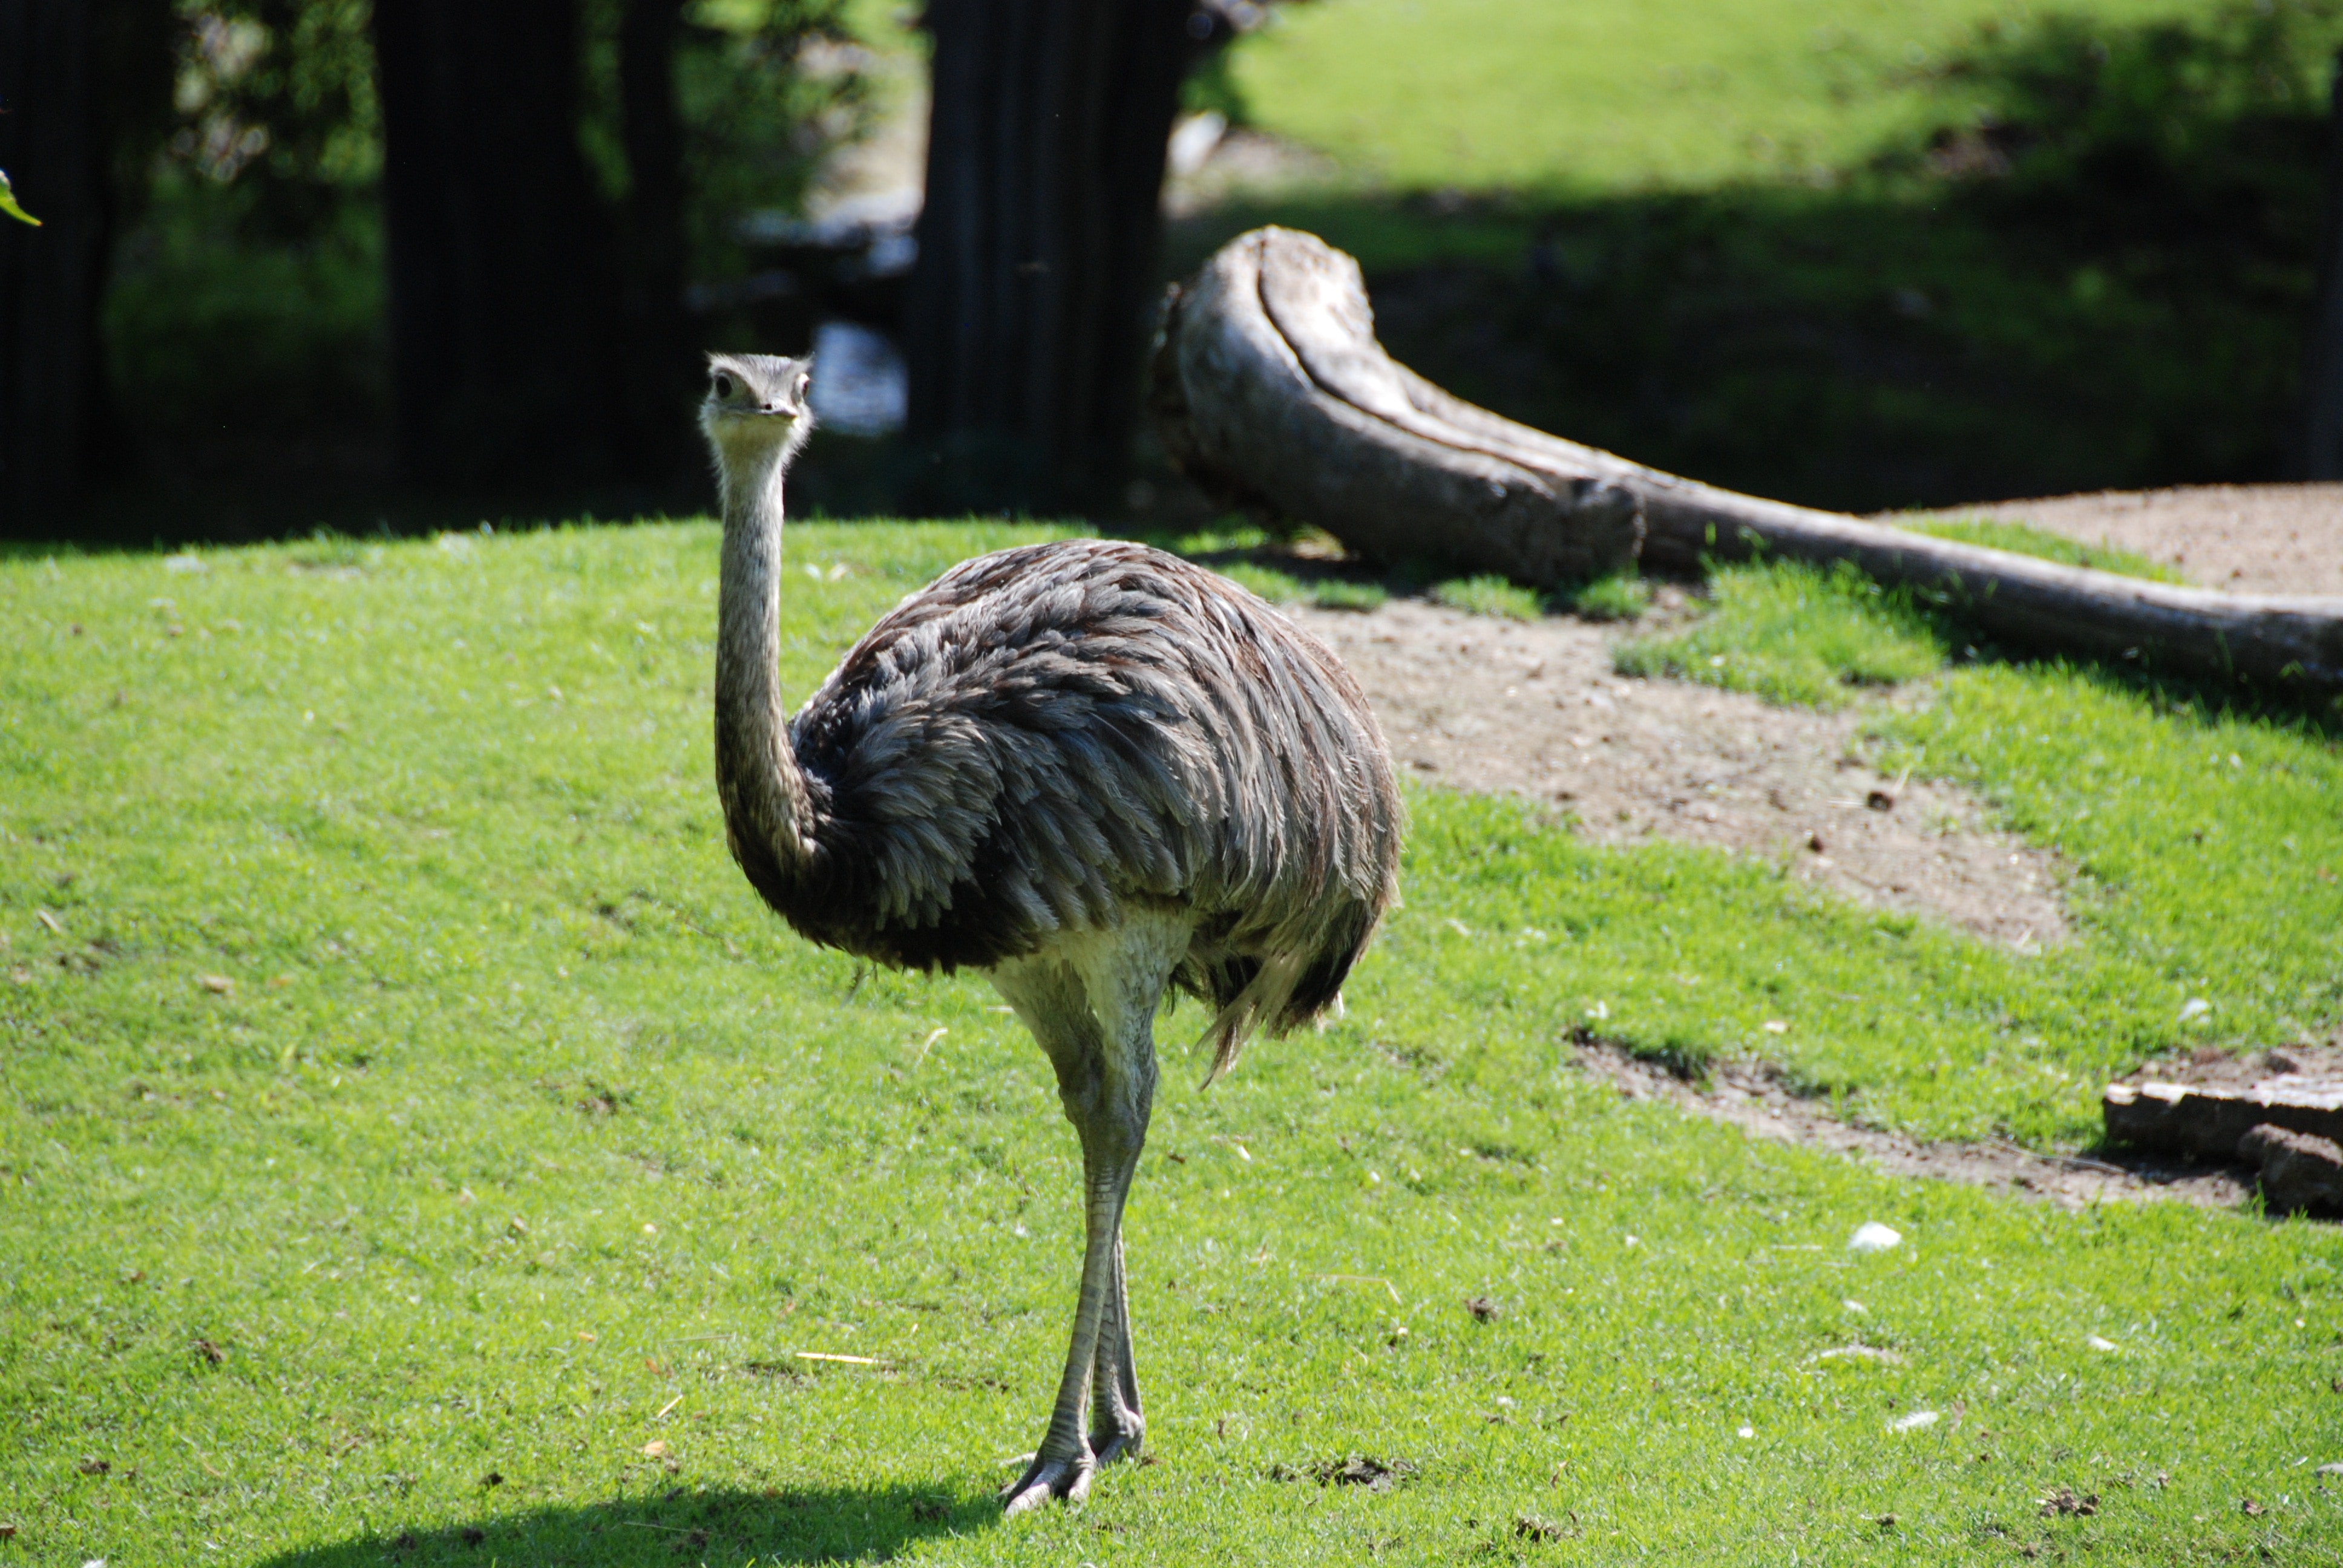 Zoo, Flightless Bird, Emu, one animal, bird